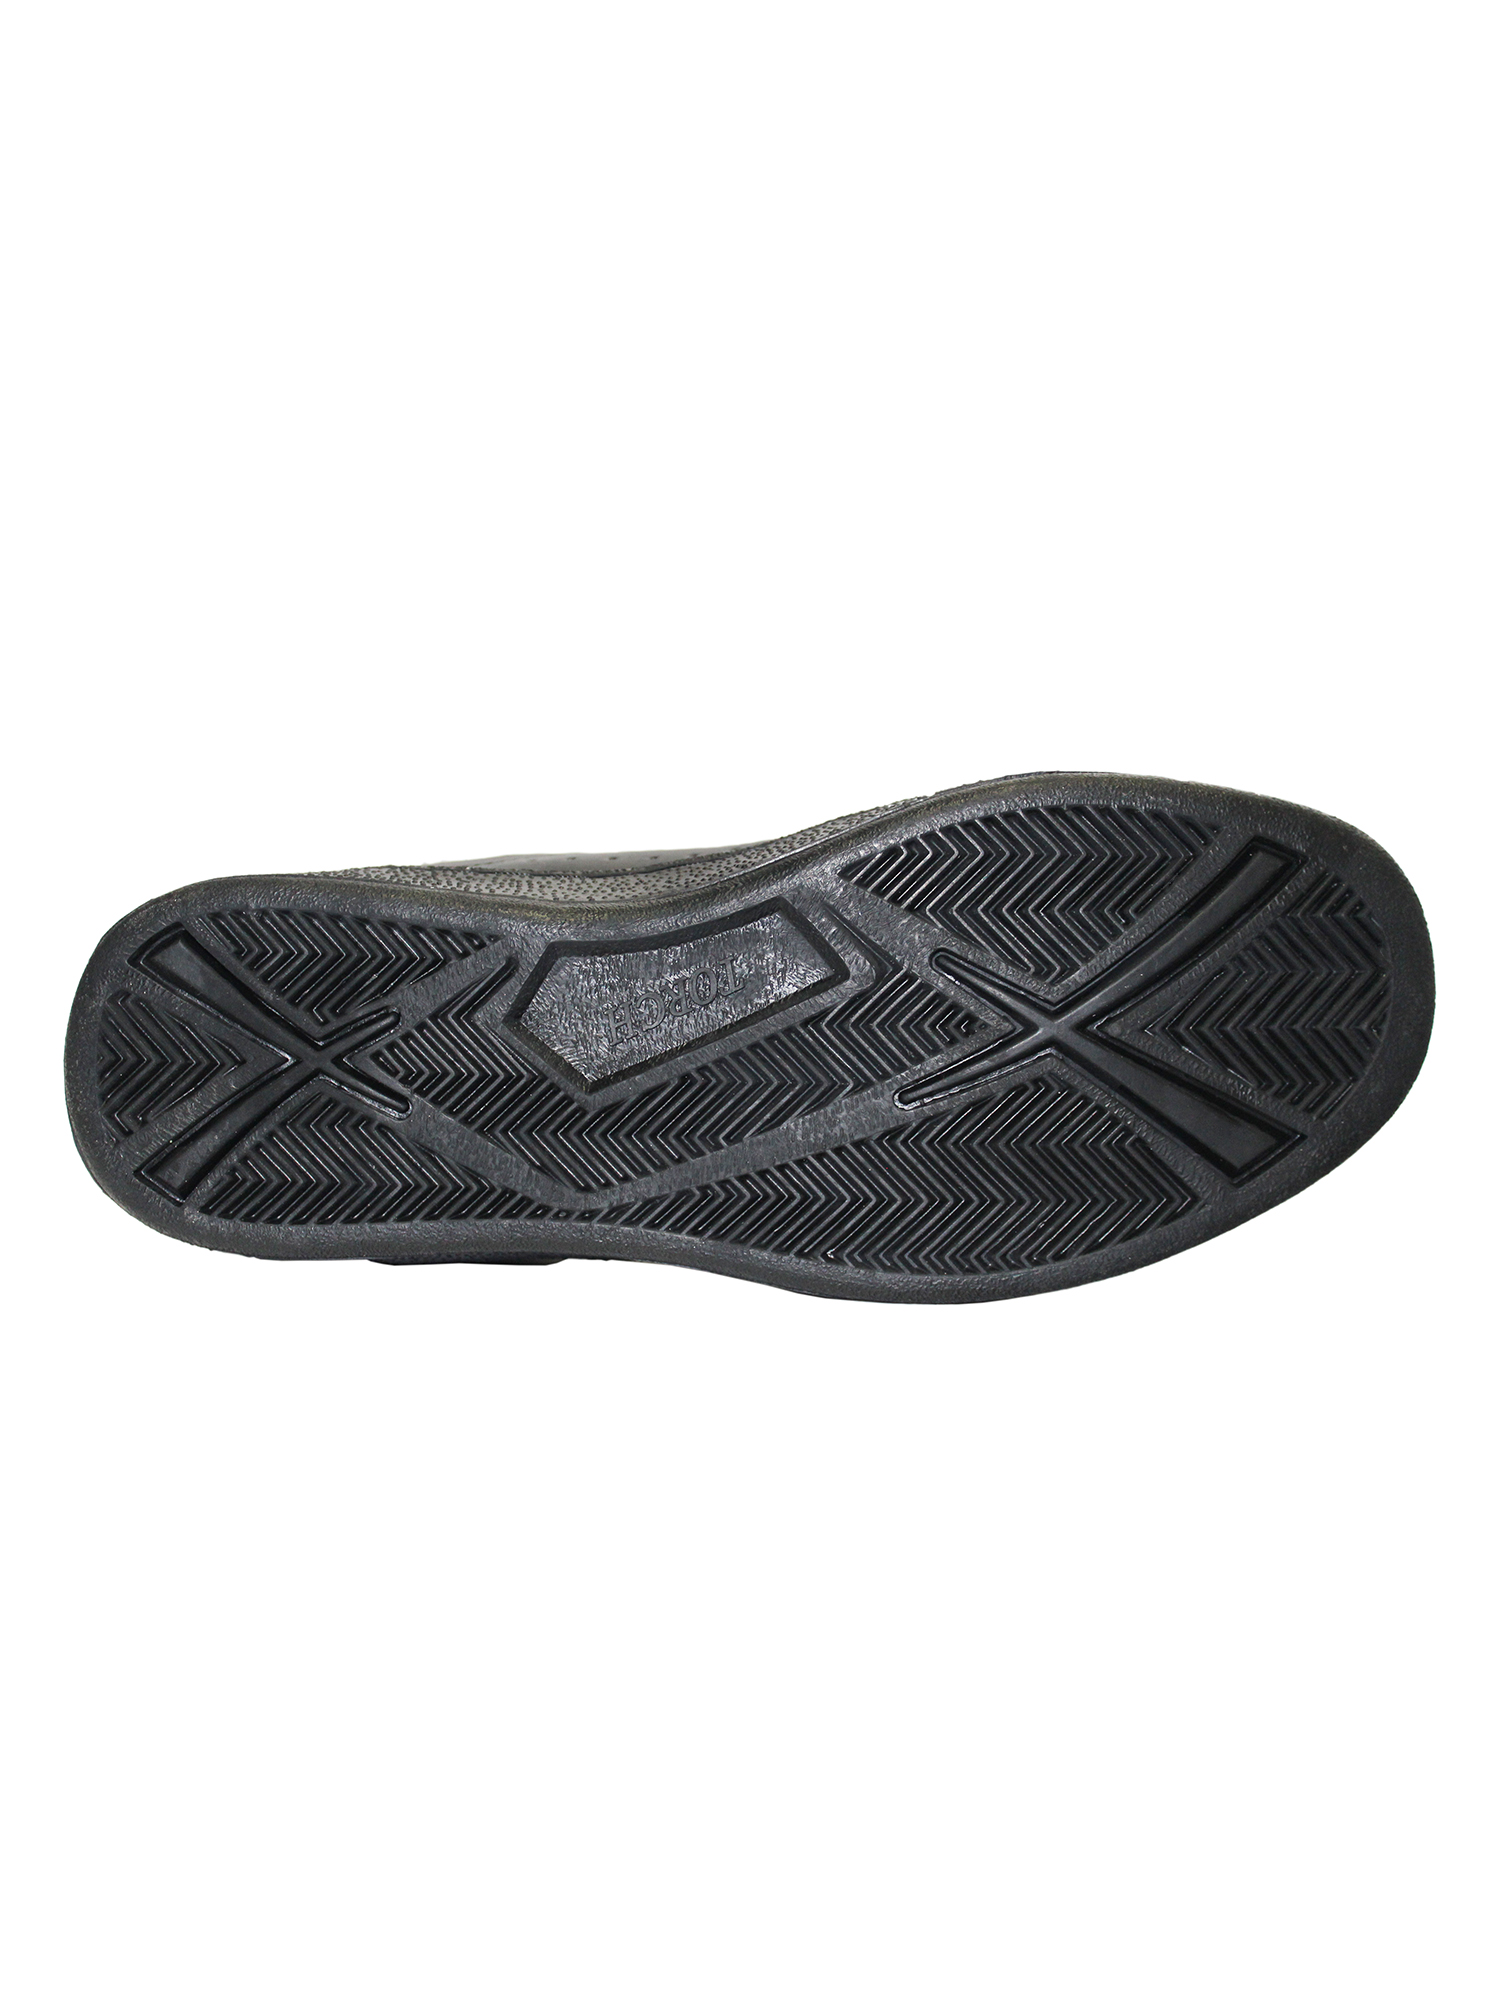 Tanleewa Men's Leather Strap Sneakers Lightweight Hook and Loop Walking Shoe Size 6.5 Adult Male - image 3 of 4